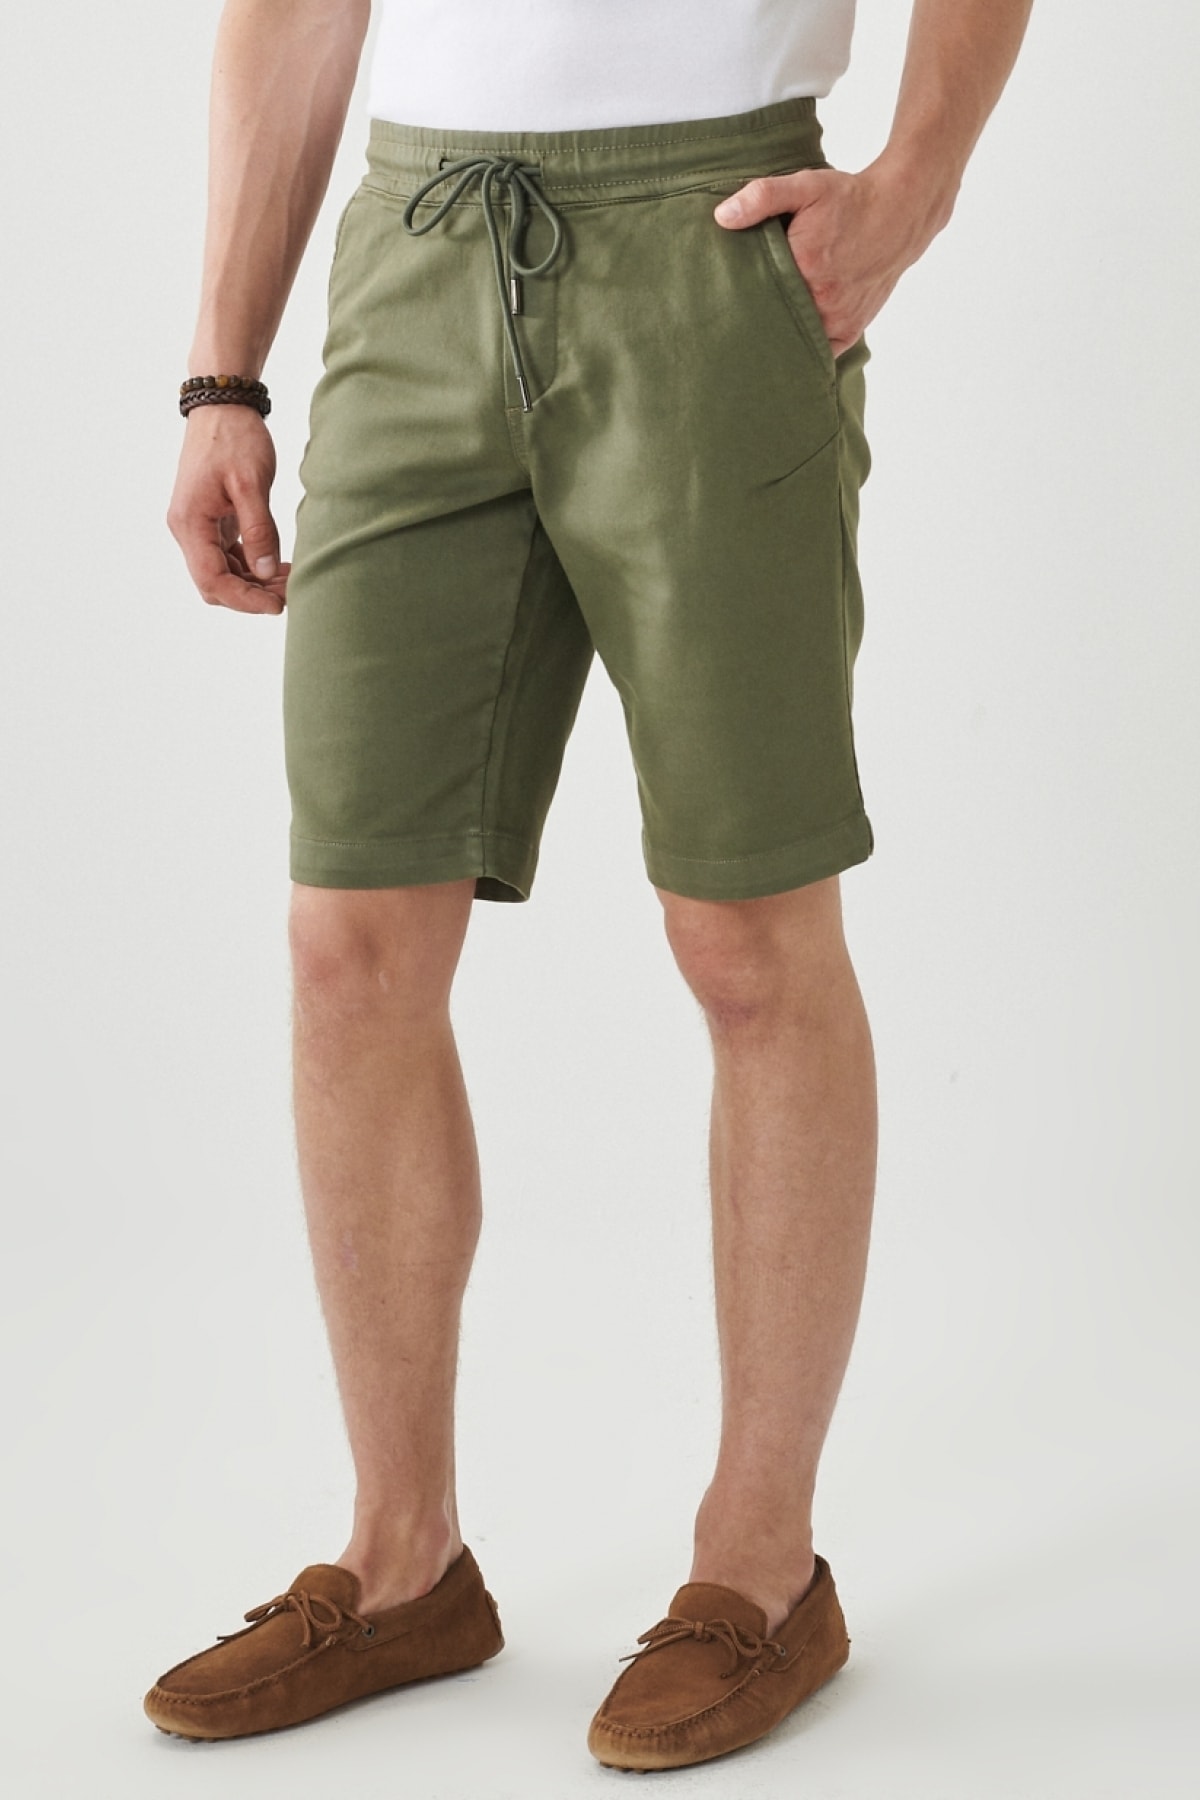 ALTINYILDIZ CLASSICS Men's Khaki Slim Fit Slim Fit Normal Waist Flexible Casual Shorts with Side Pockets